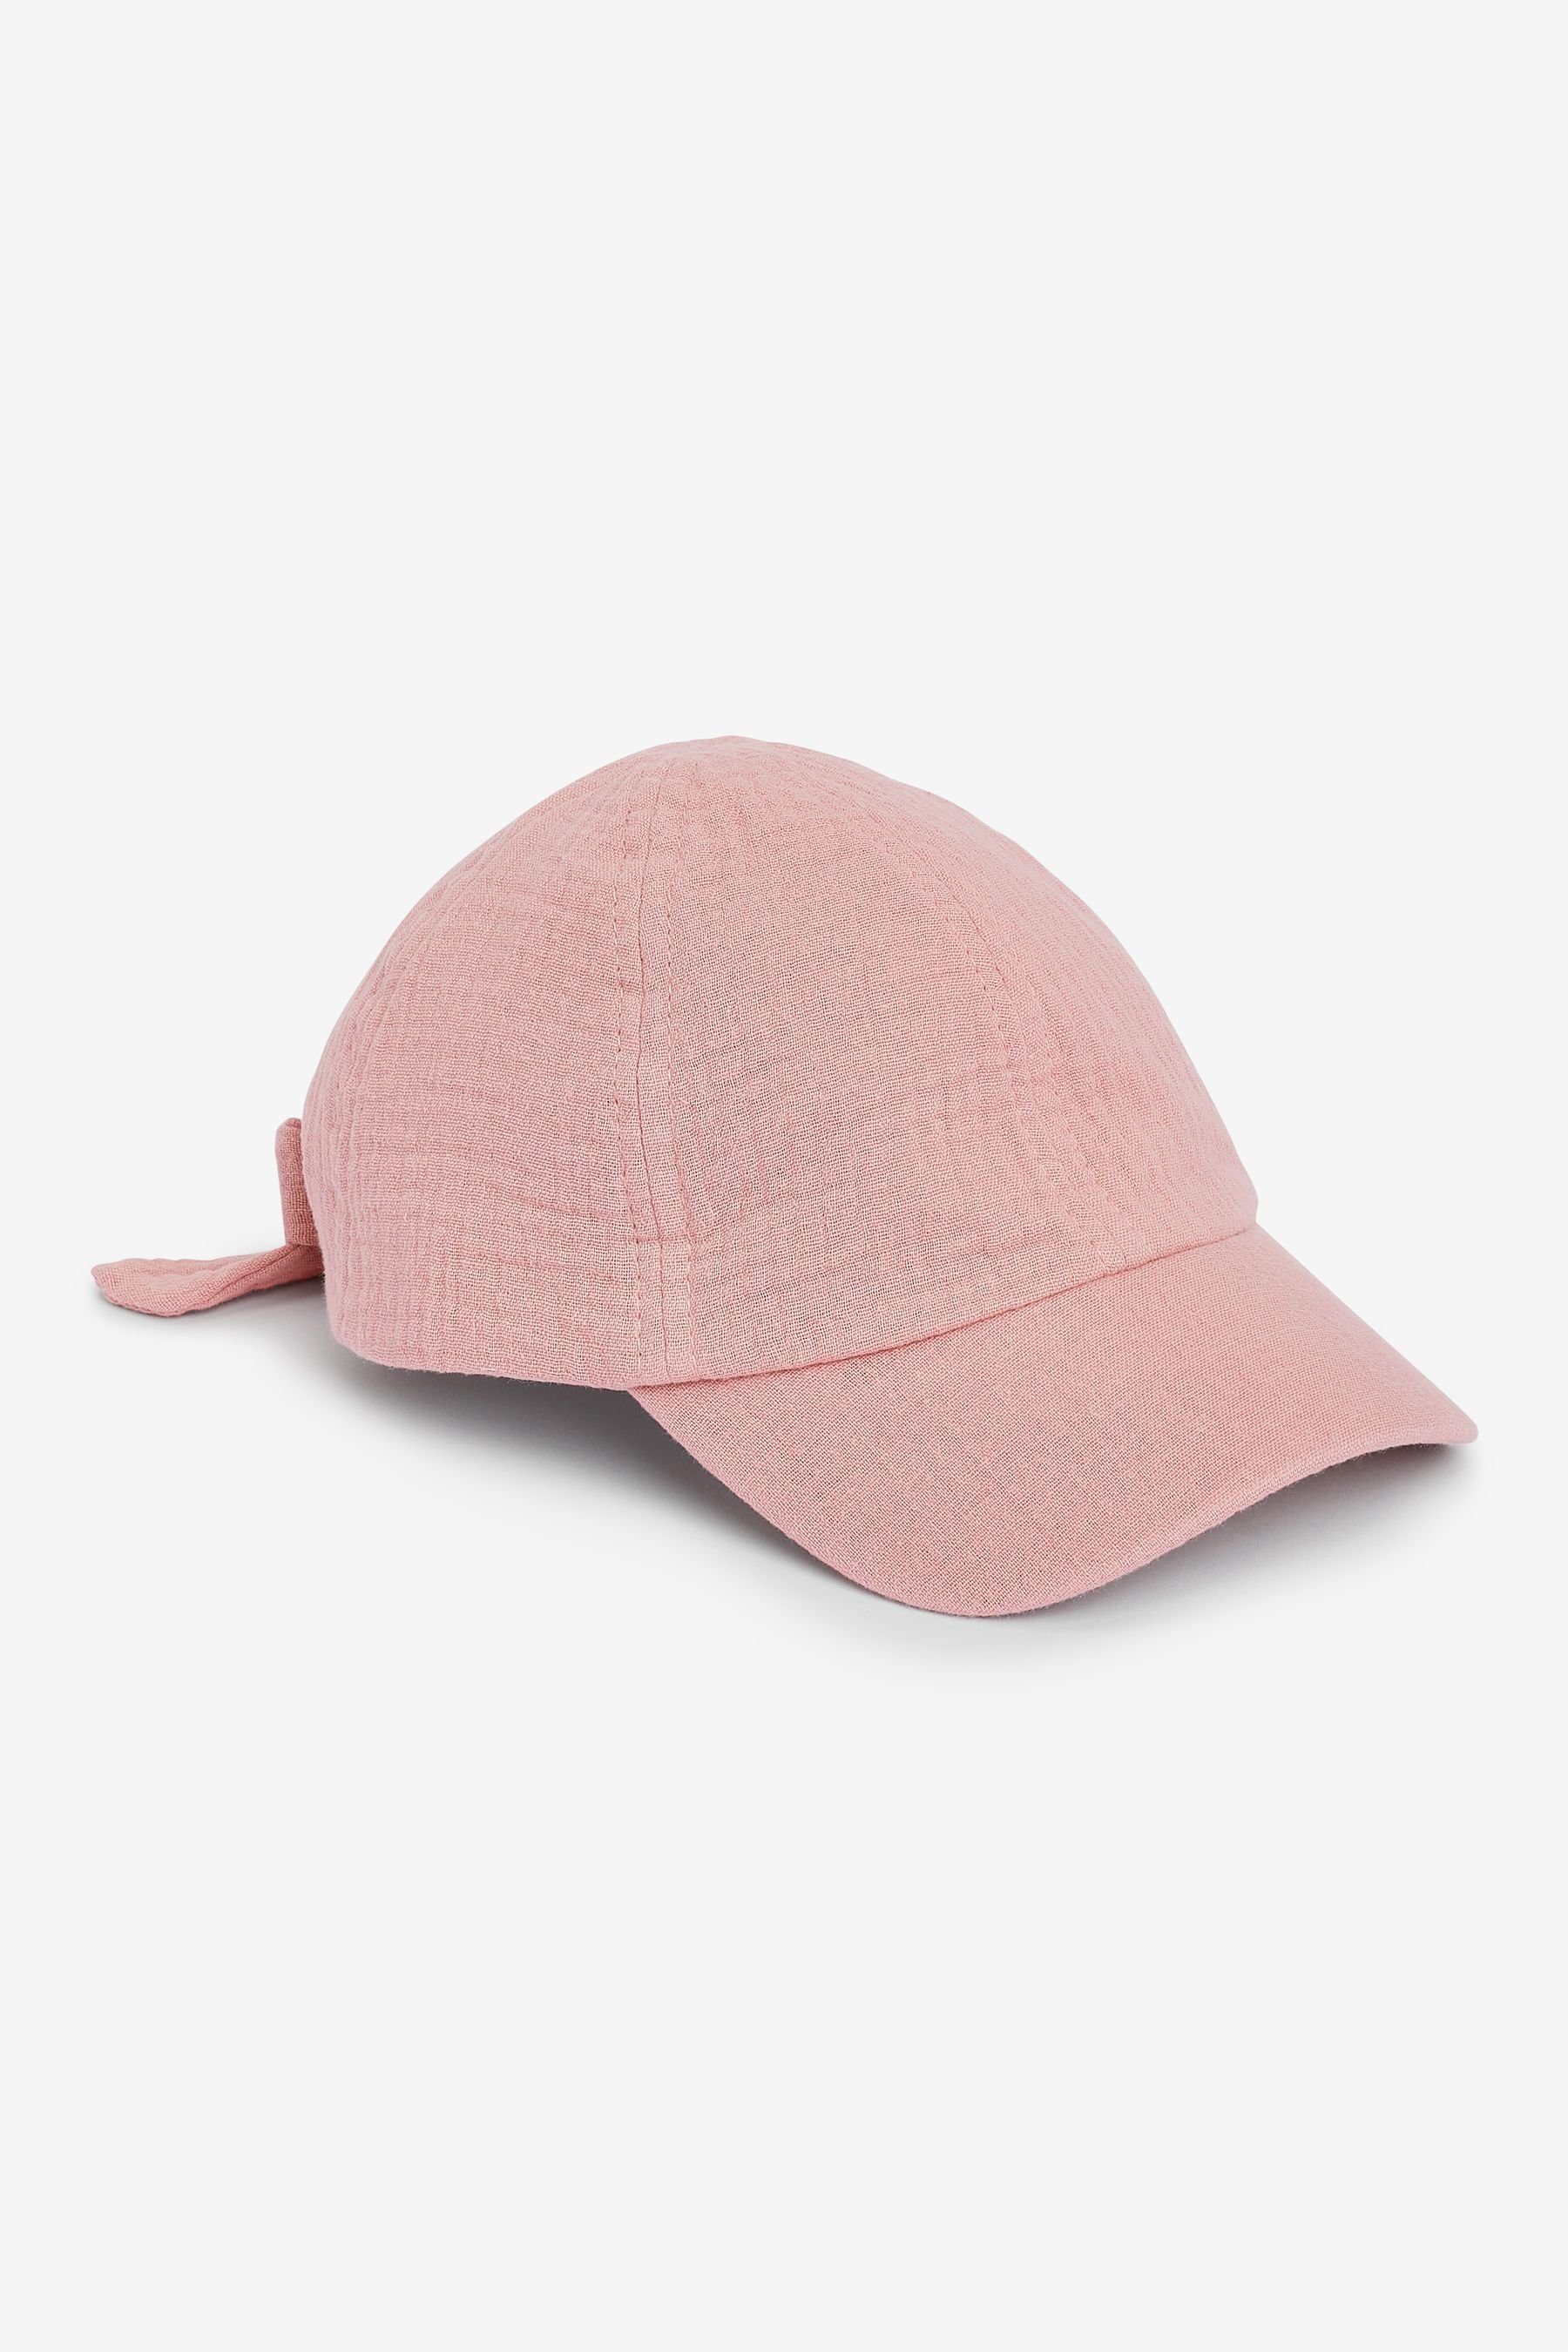 Baseball Kappe mit Cap Schleifendetail rückseitigem Next Pink (1-St)